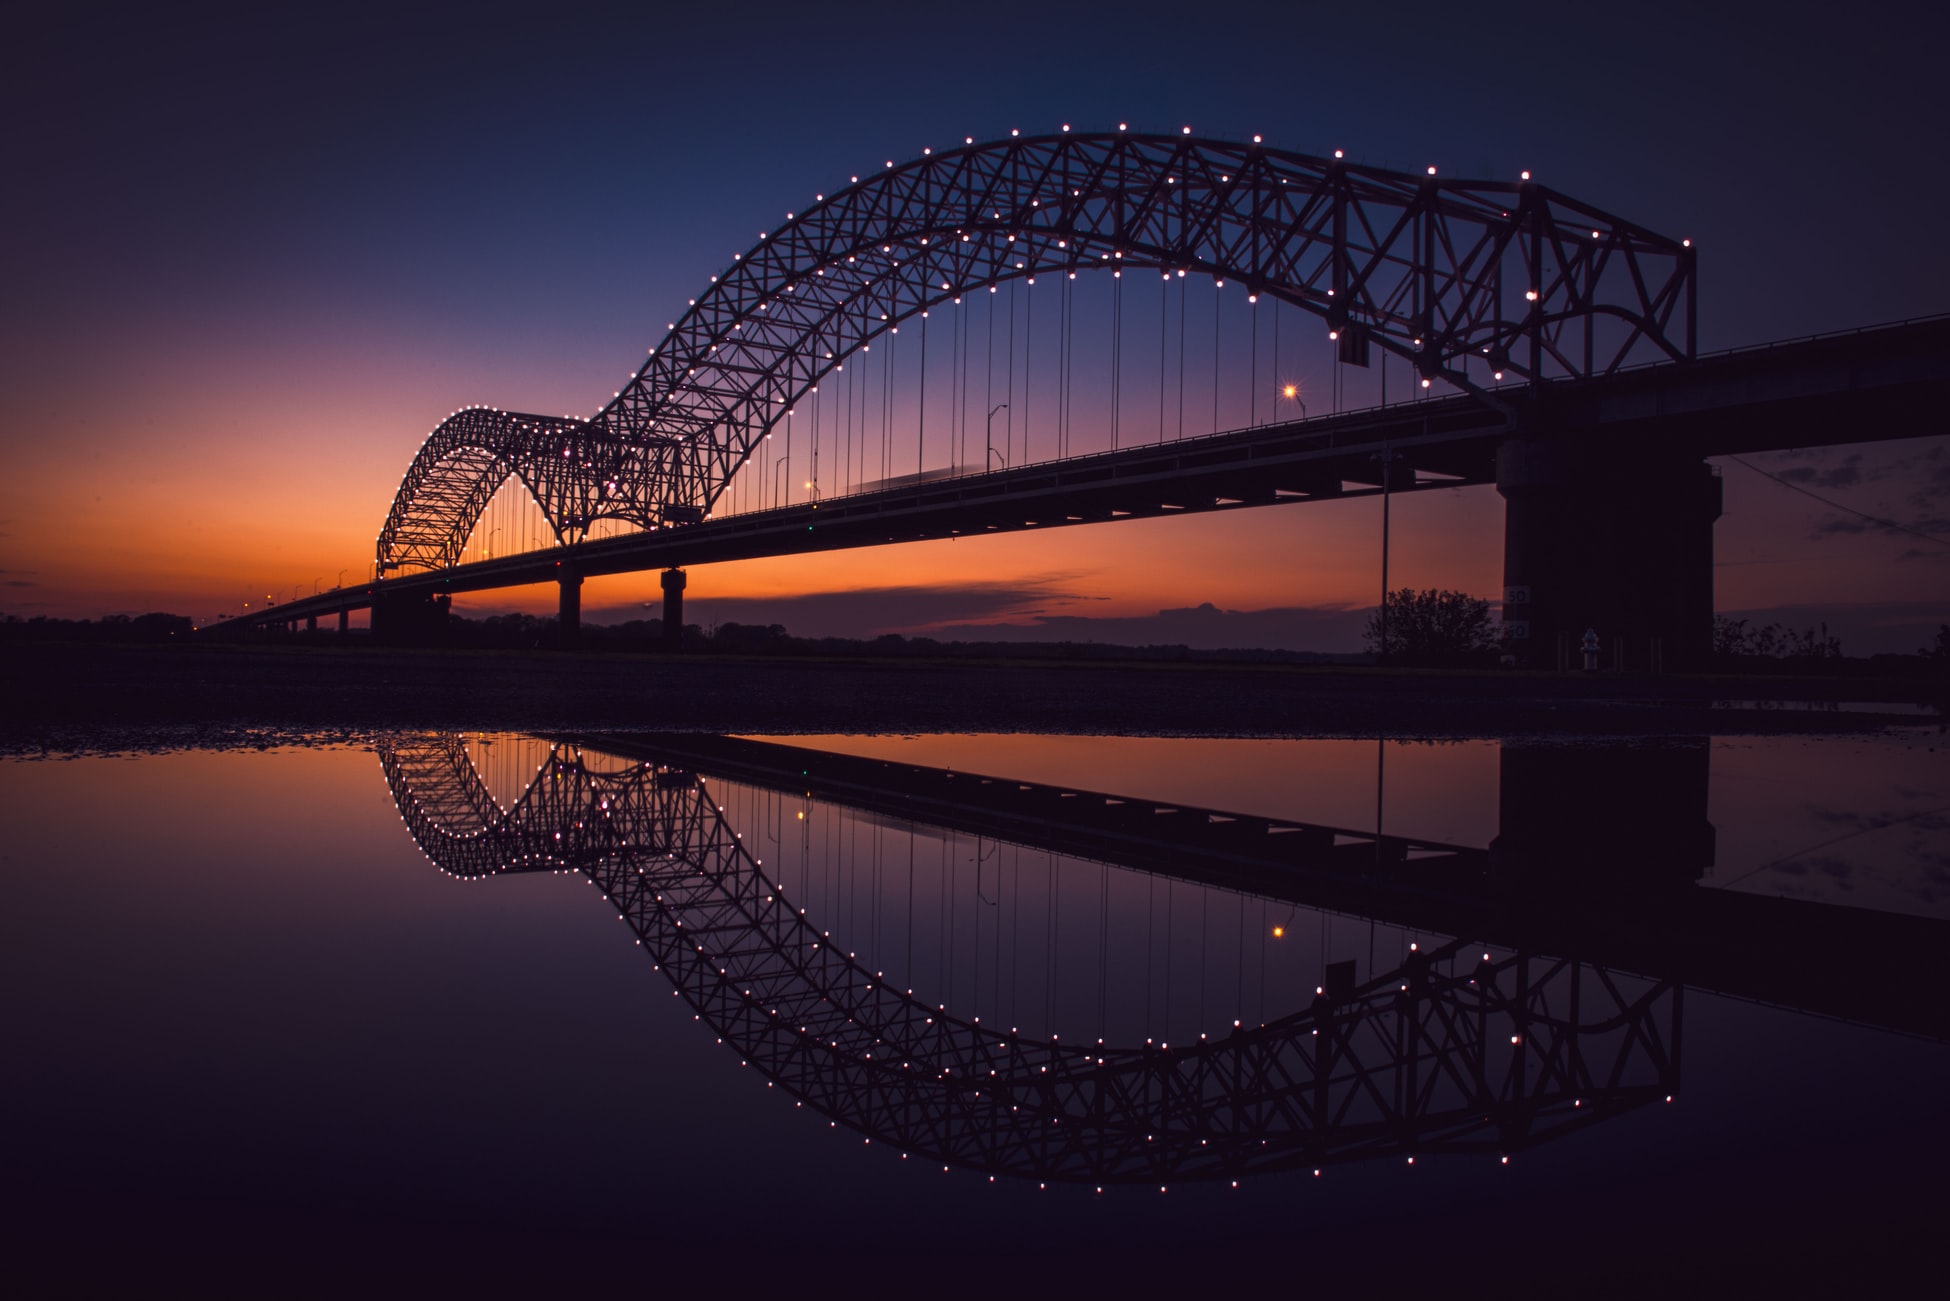 The Memphis Bridge at sunset